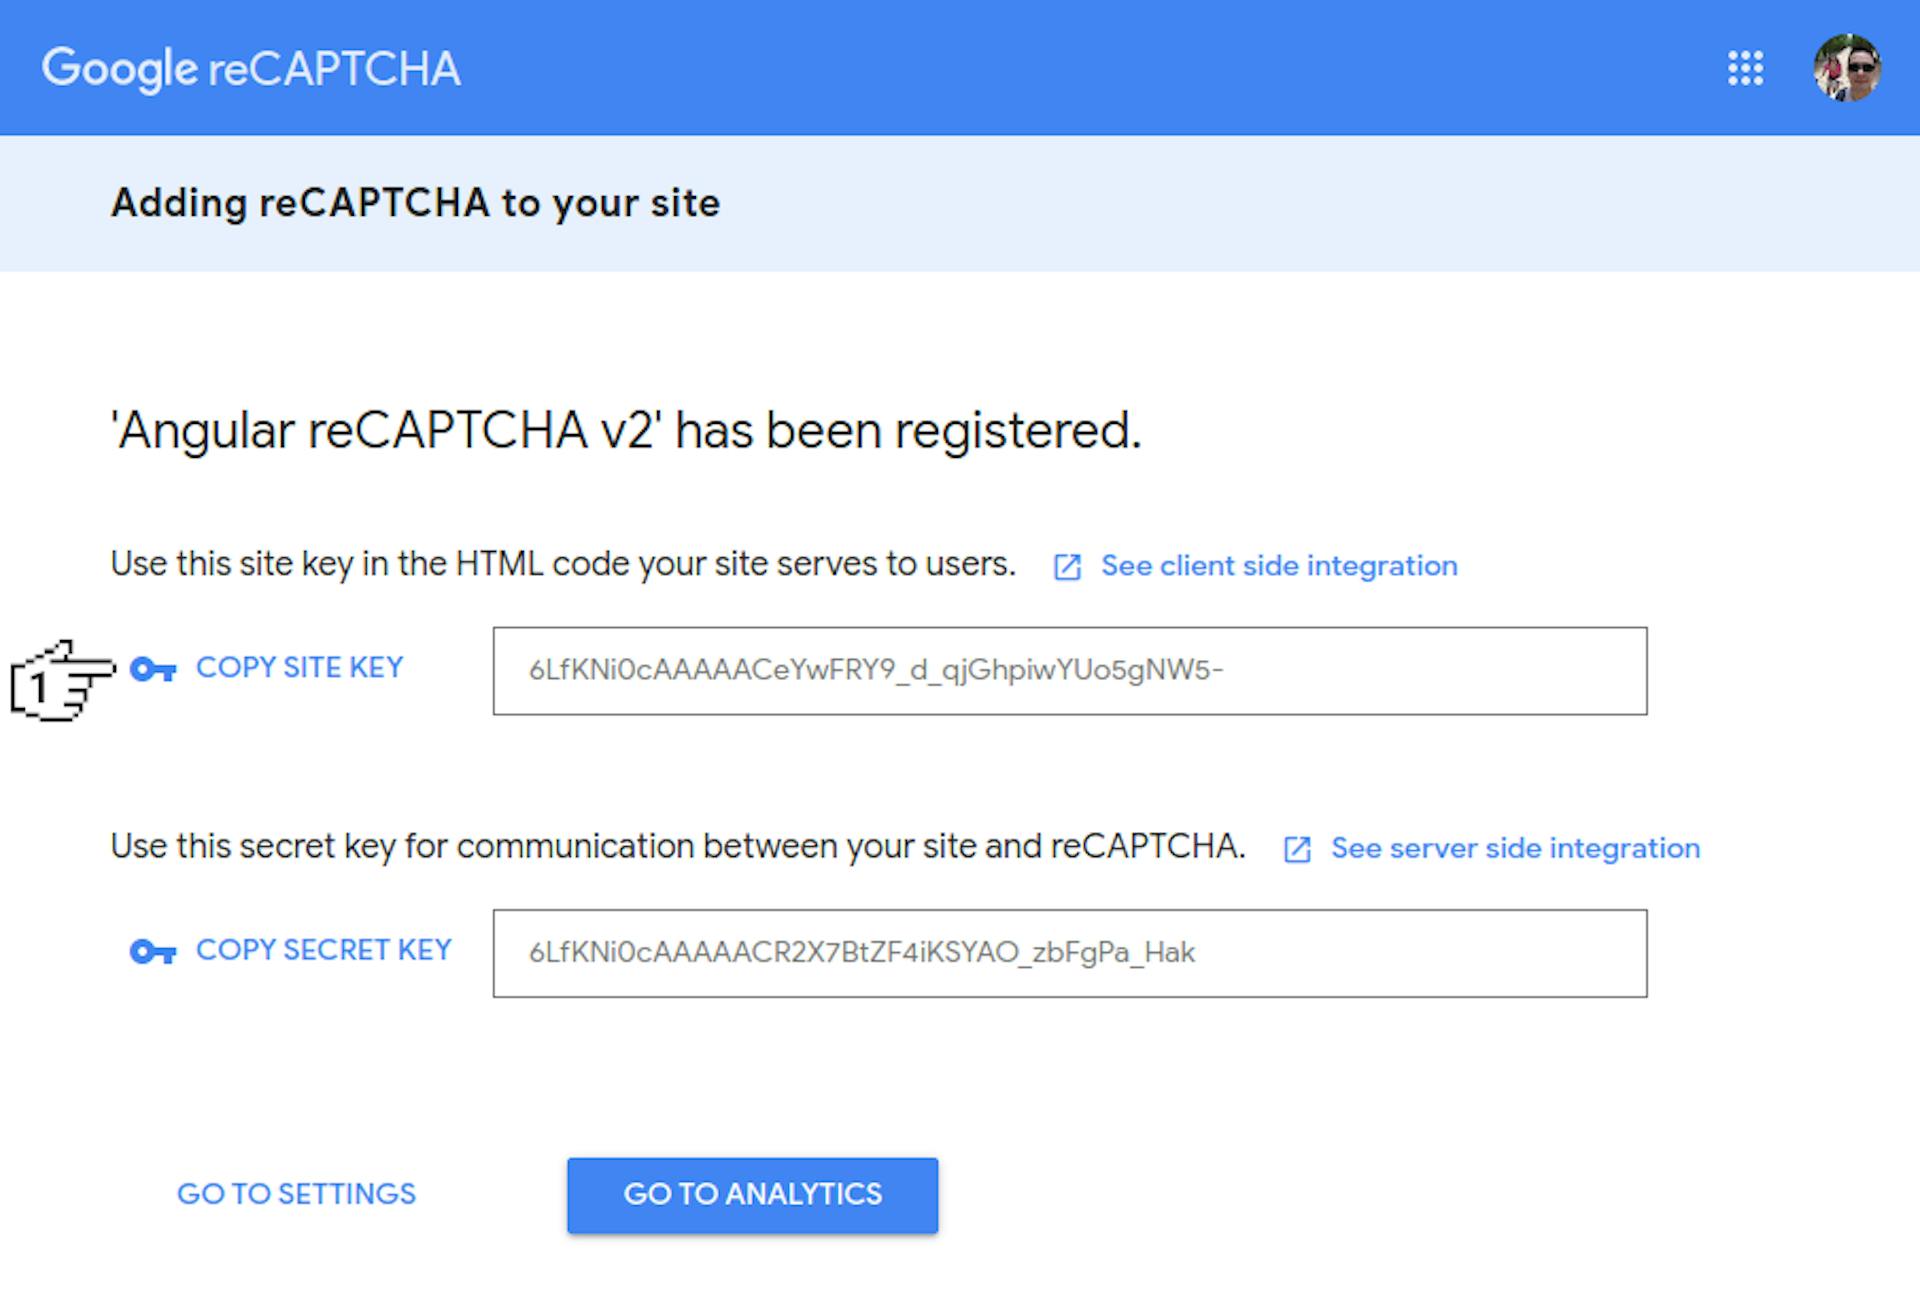 Google reCAPTCHA - Adding reCAPTCHA to your site